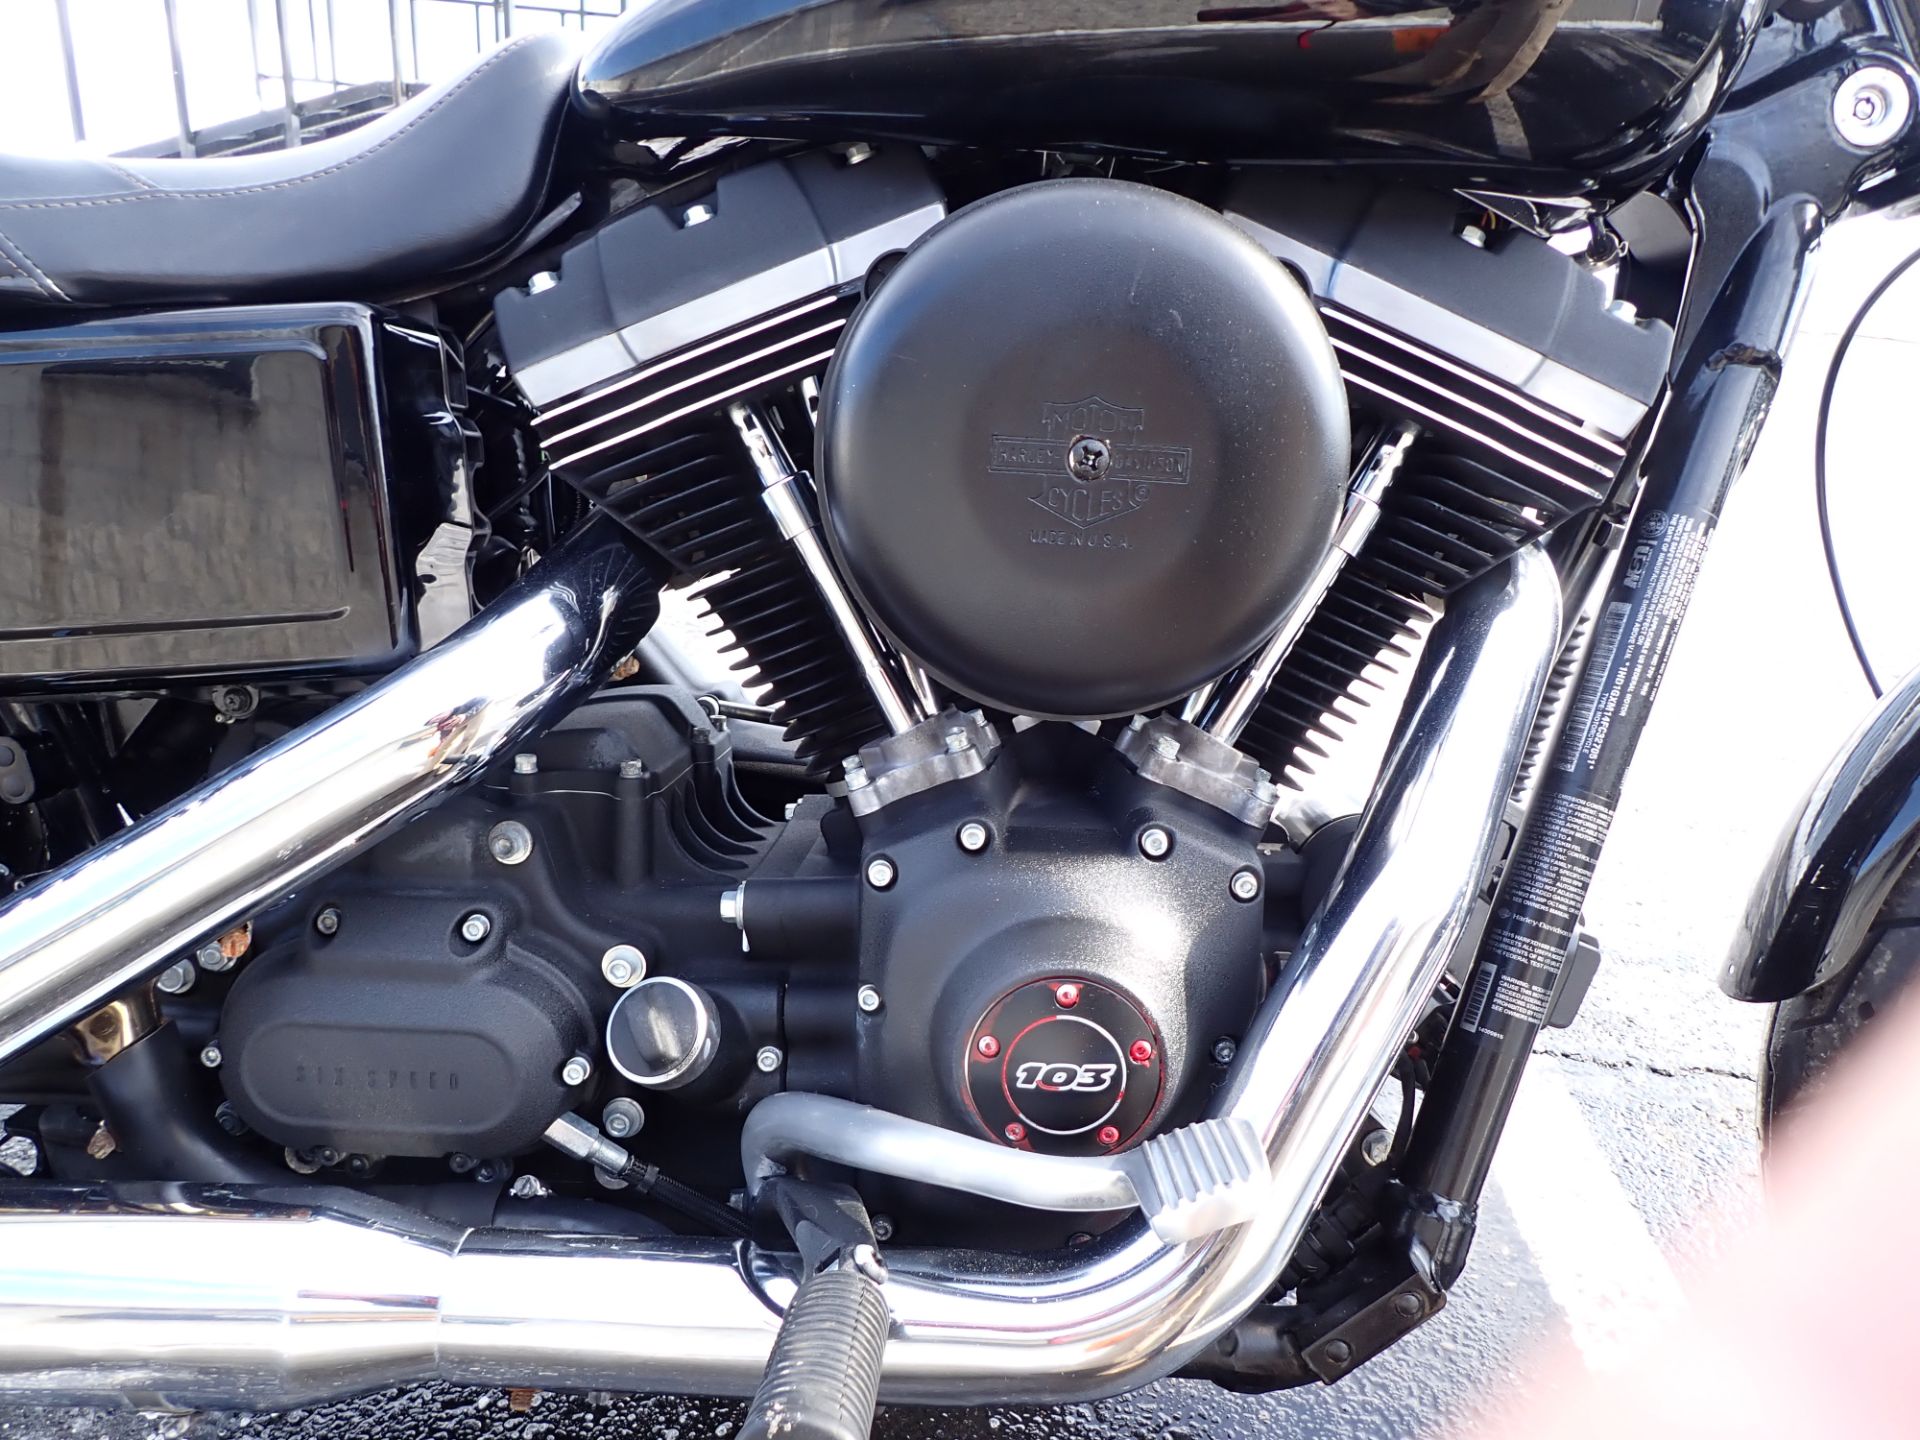 2015 Harley-Davidson Street Bob® in Massillon, Ohio - Photo 4